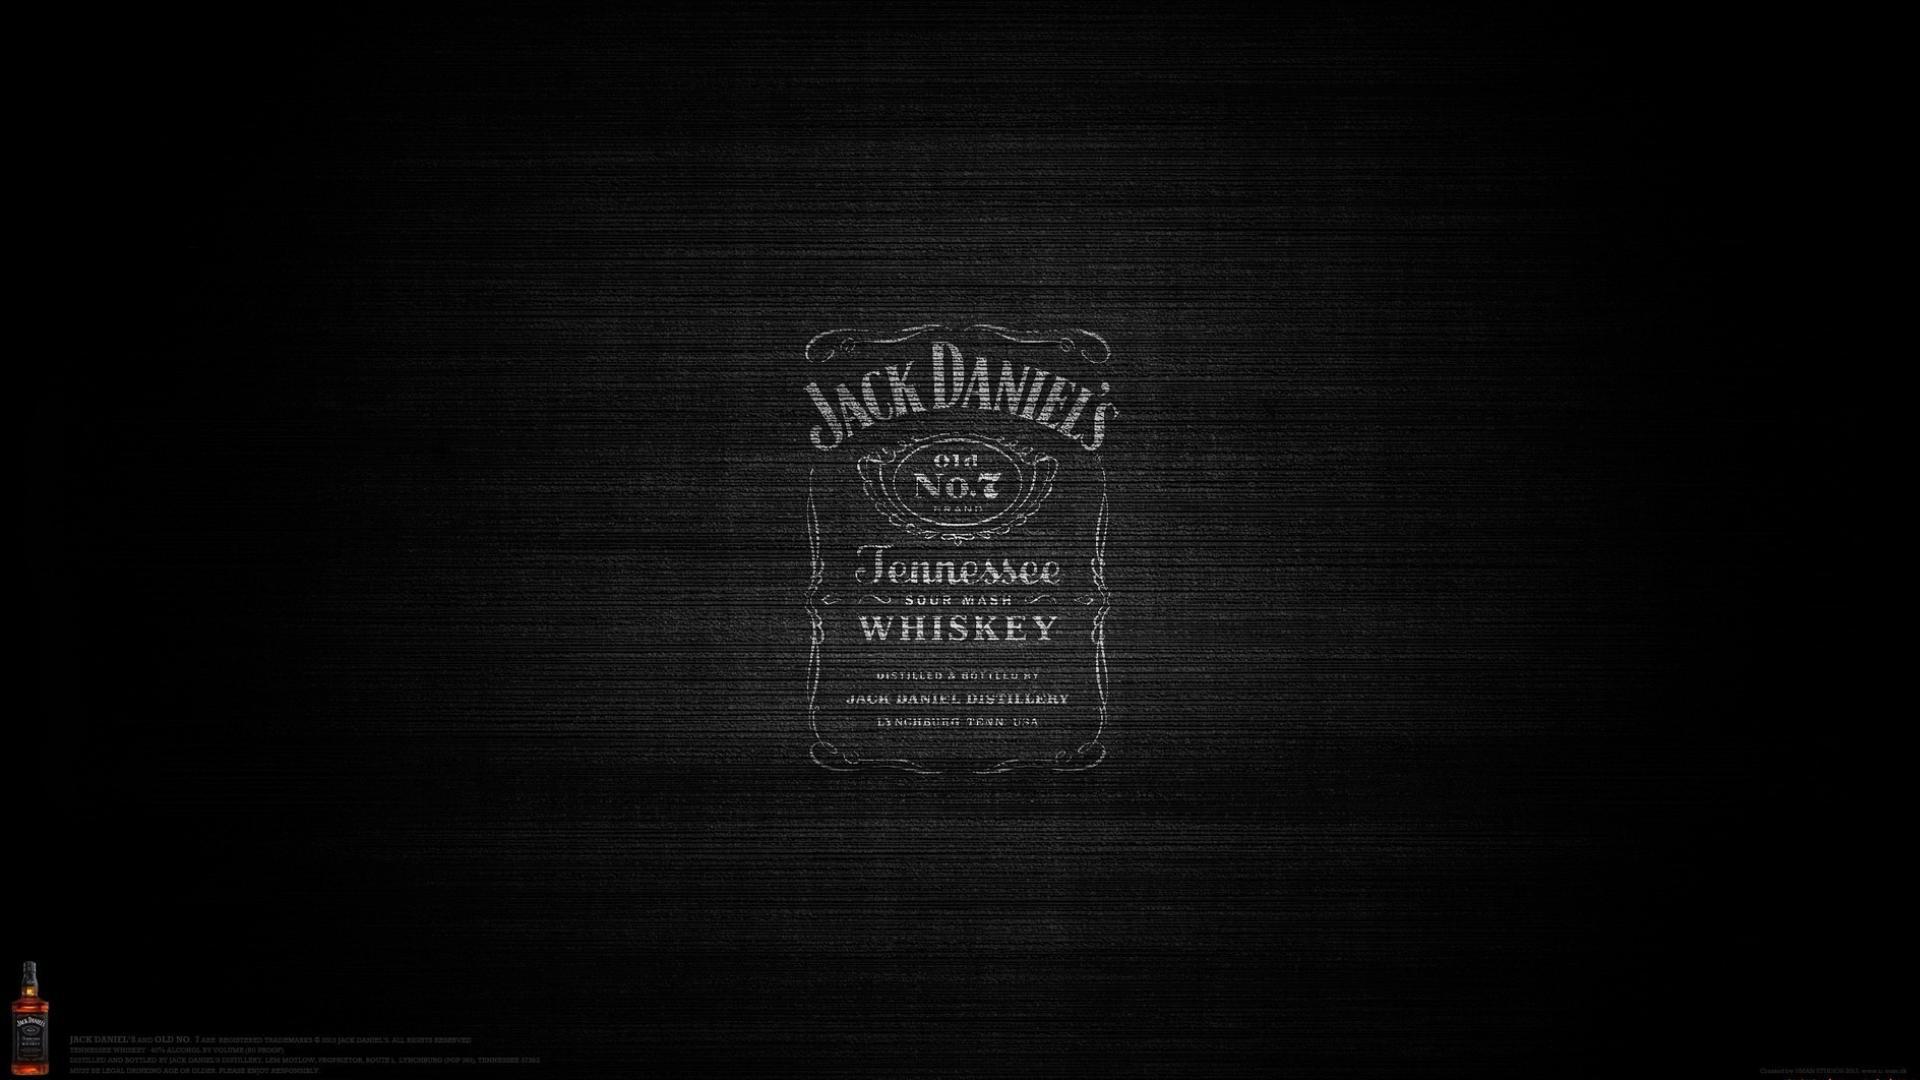 Jack Daniel's Wallpaper Image Photo Picture Background